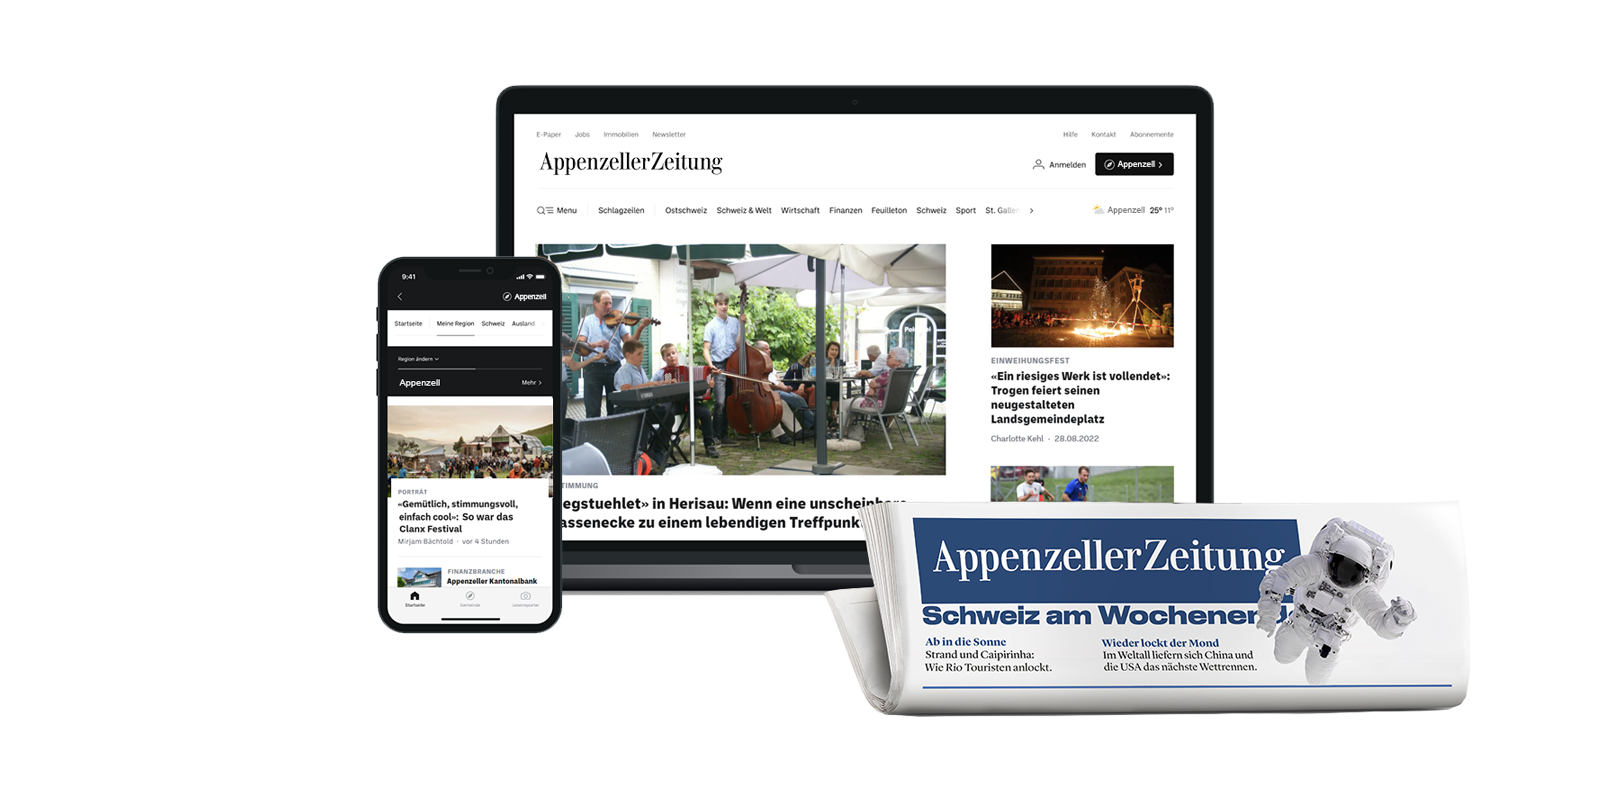 Appenzeller Zeitung, appenzellerzeitung.ch